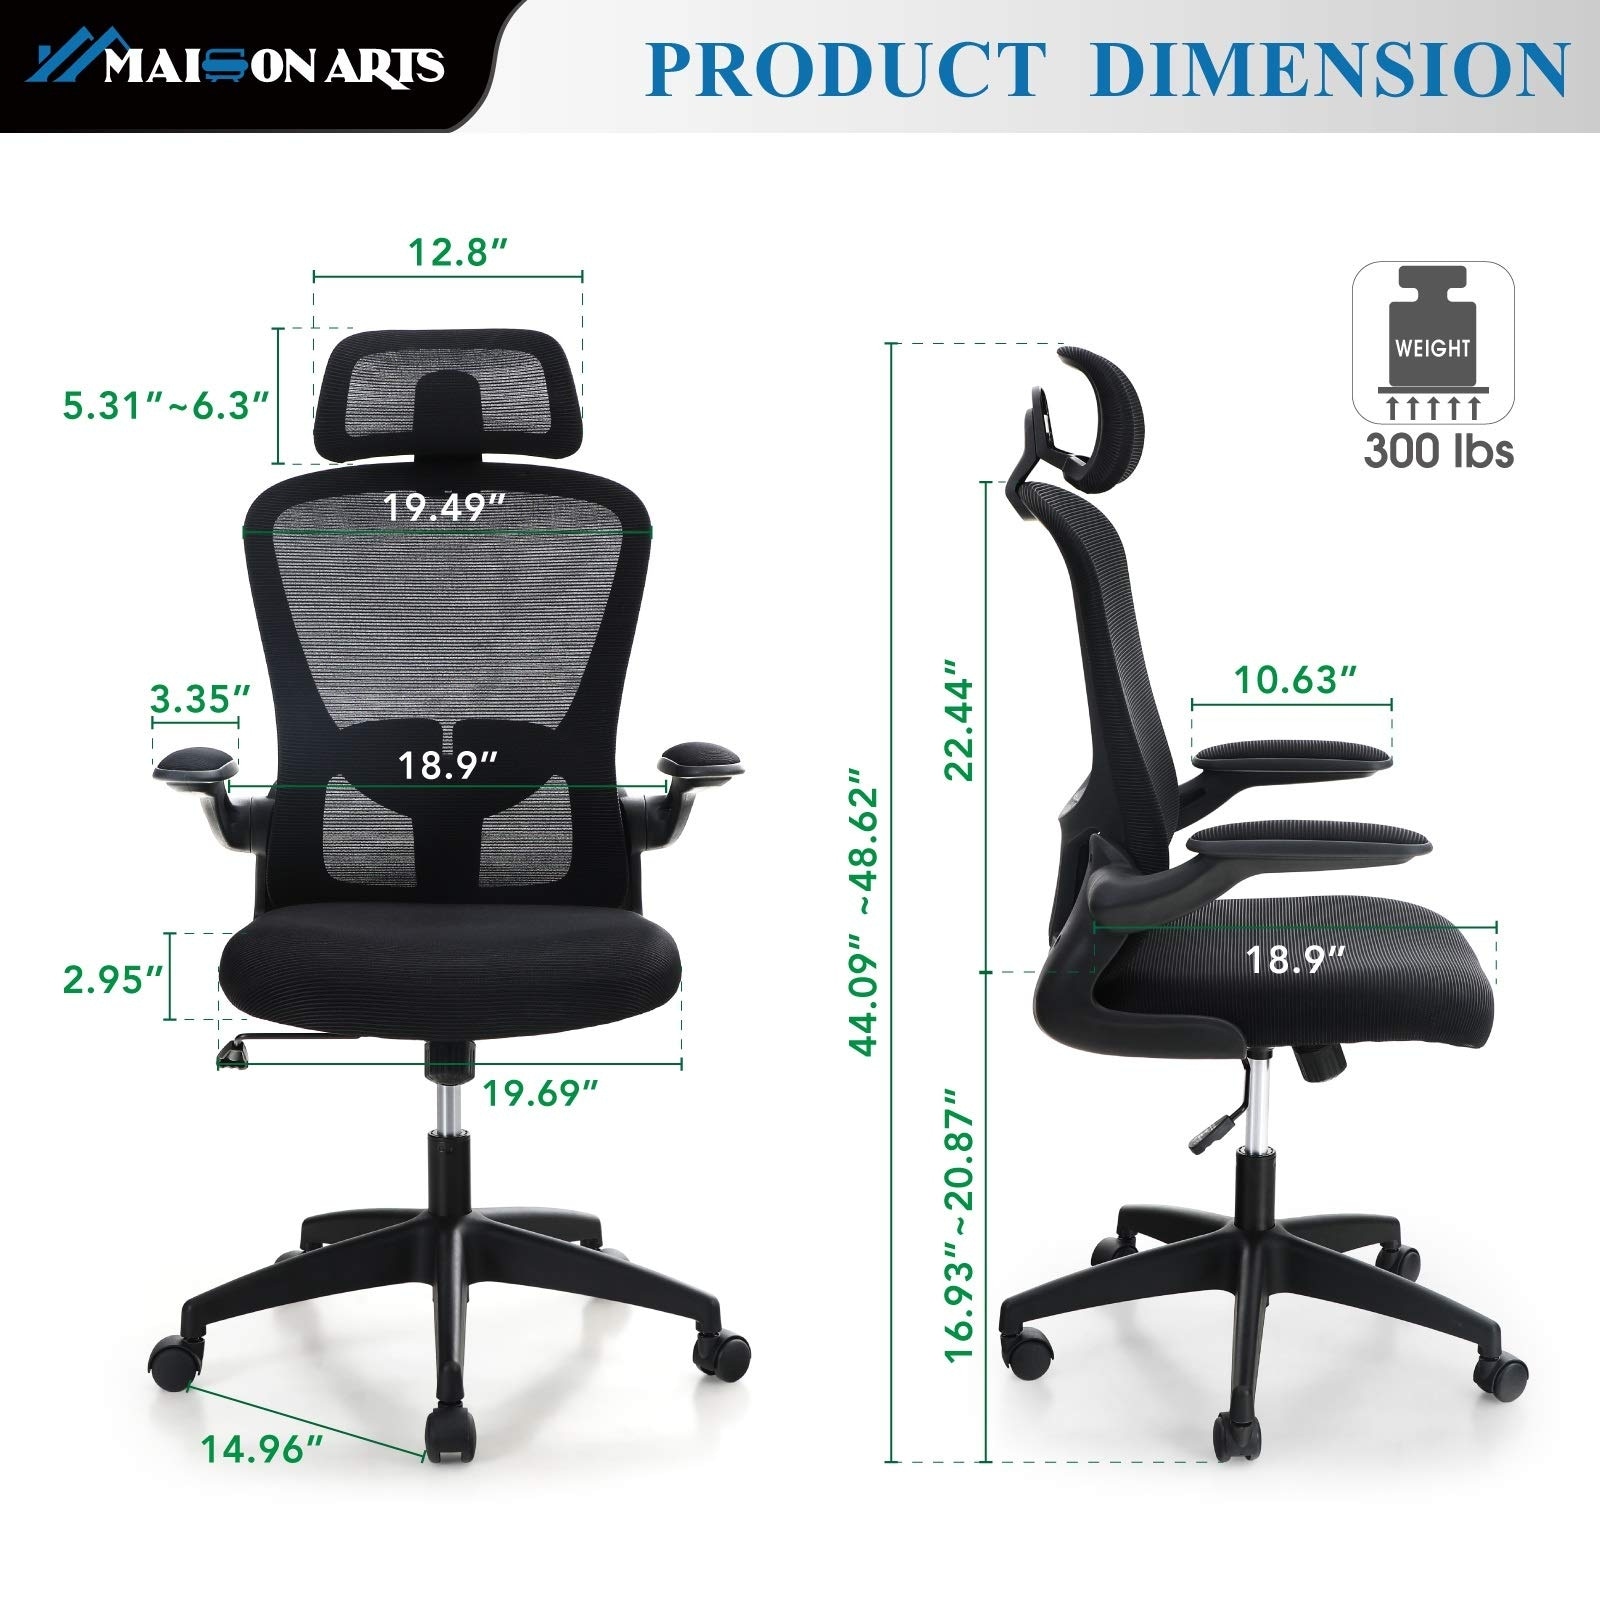 https://ak1.ostkcdn.com/images/products/is/images/direct/b41050bfe0a8cb17b4de4e4945cddcf068187a27/MAISON-ARTS-Ergonomic-Mesh-Office-Desk-Chair-High-Back%2C-360%C2%B0-Swivel-Executive-Chair-Adjustable-Lumbar-Support-%26-Headrest.jpg